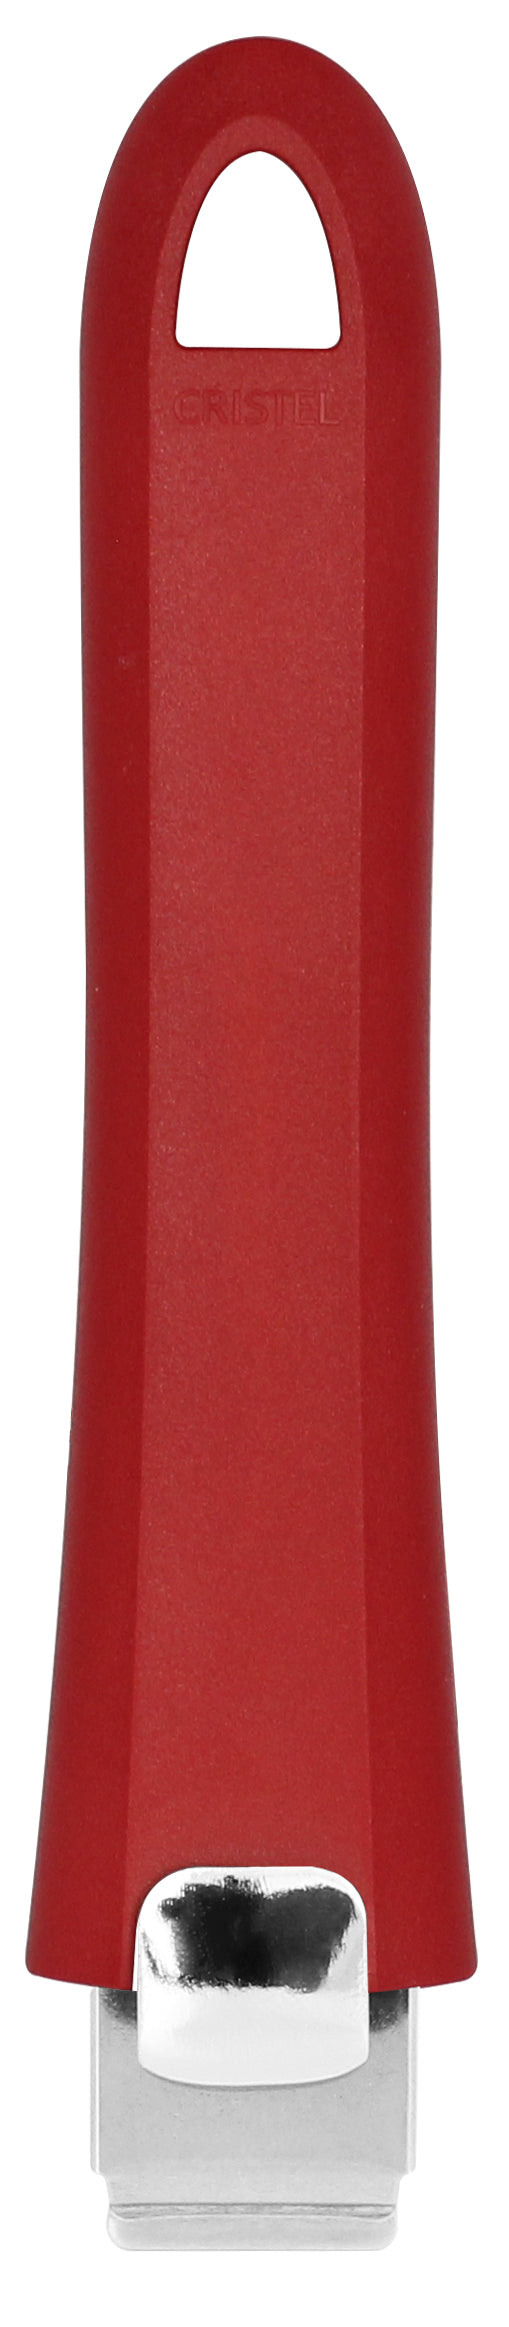 Poignée Mutine amovible rouge framboise | CRISTEL